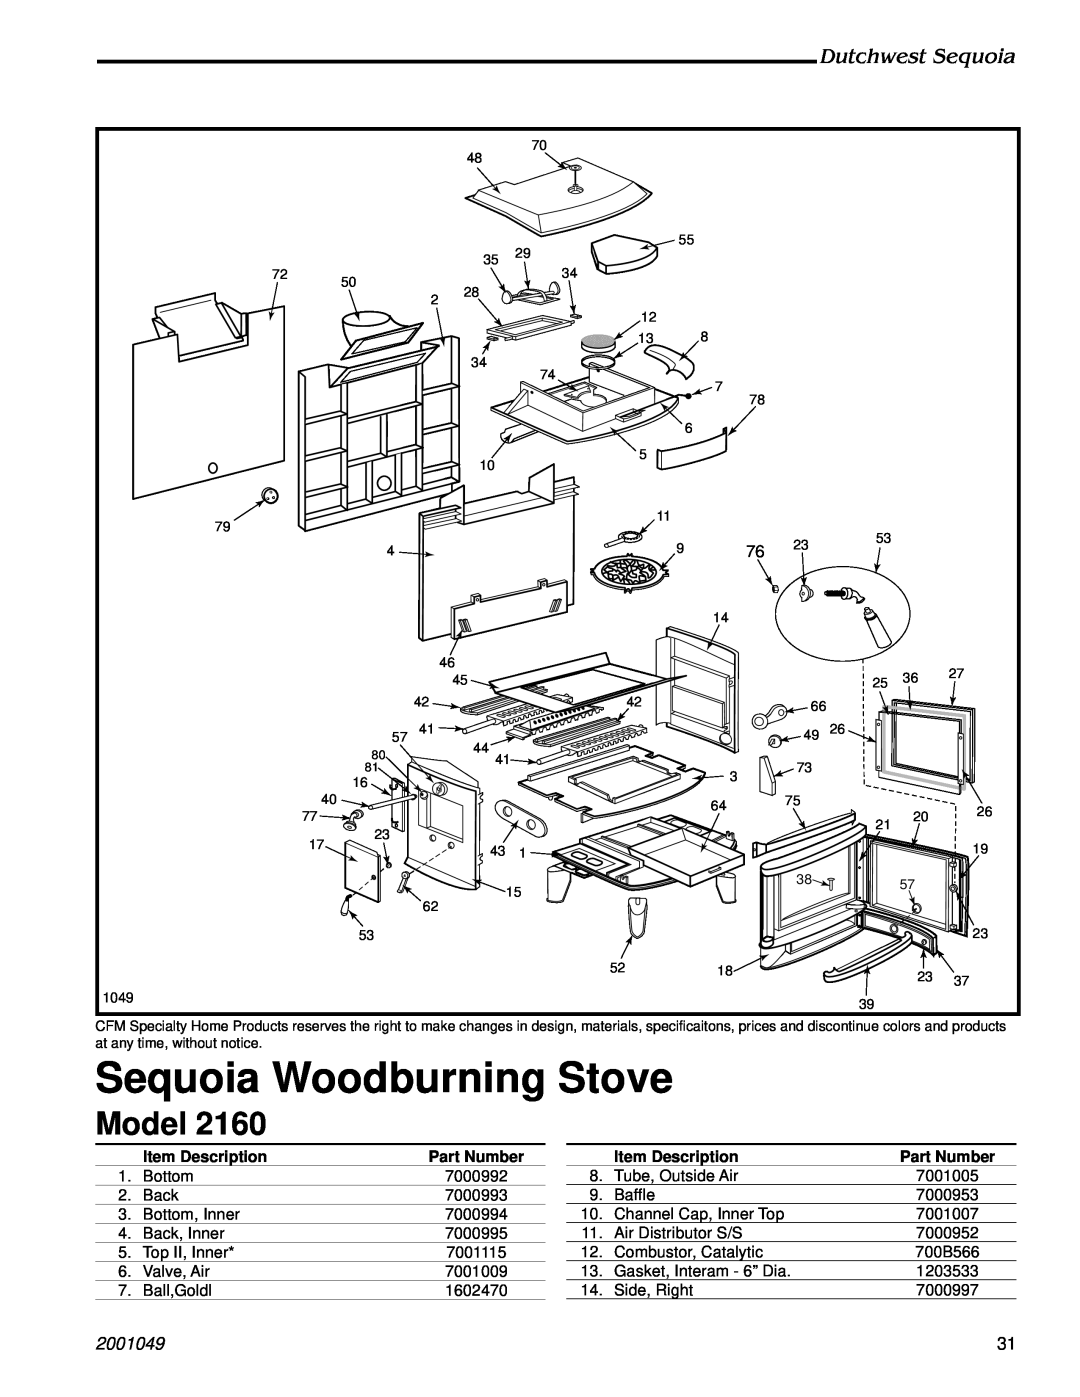 Vermont Casting 2160 manual Sequoia Woodburning Stove, Model, Dutchwest Sequoia, 2001049, Item Description, Part Number 